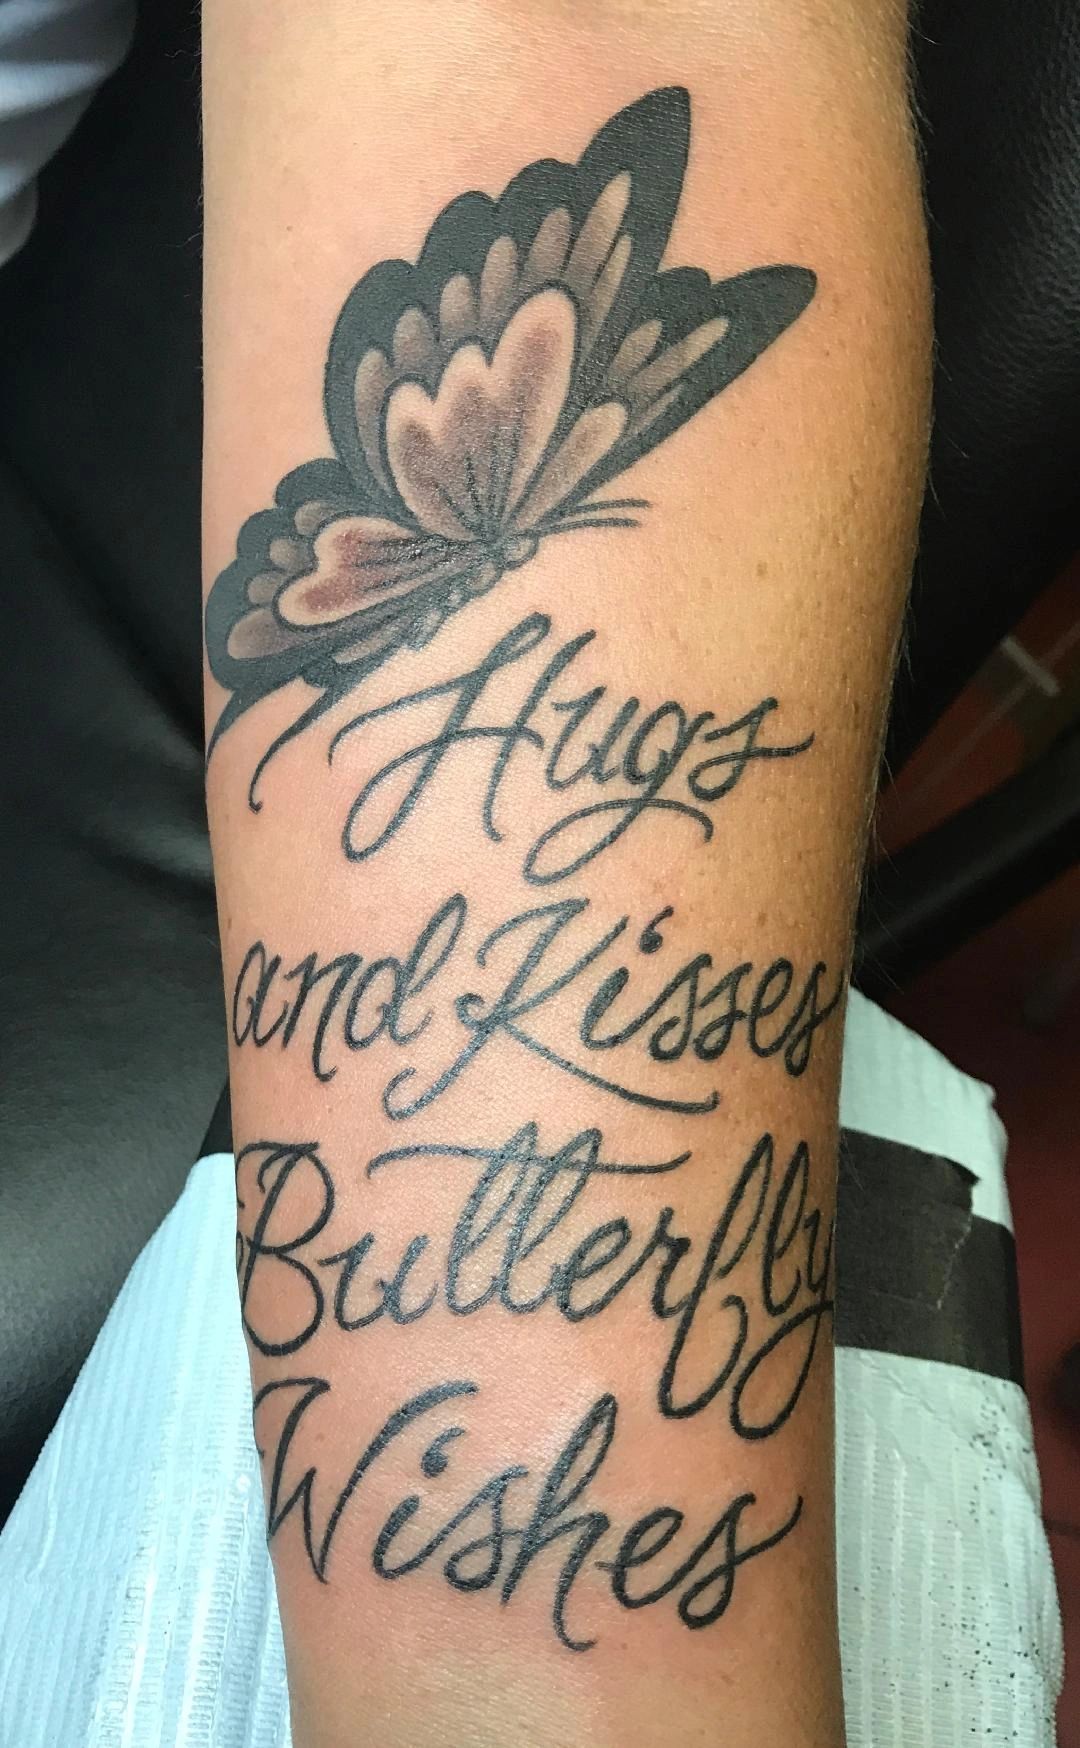 butterfly kisses tattooTikTok Search